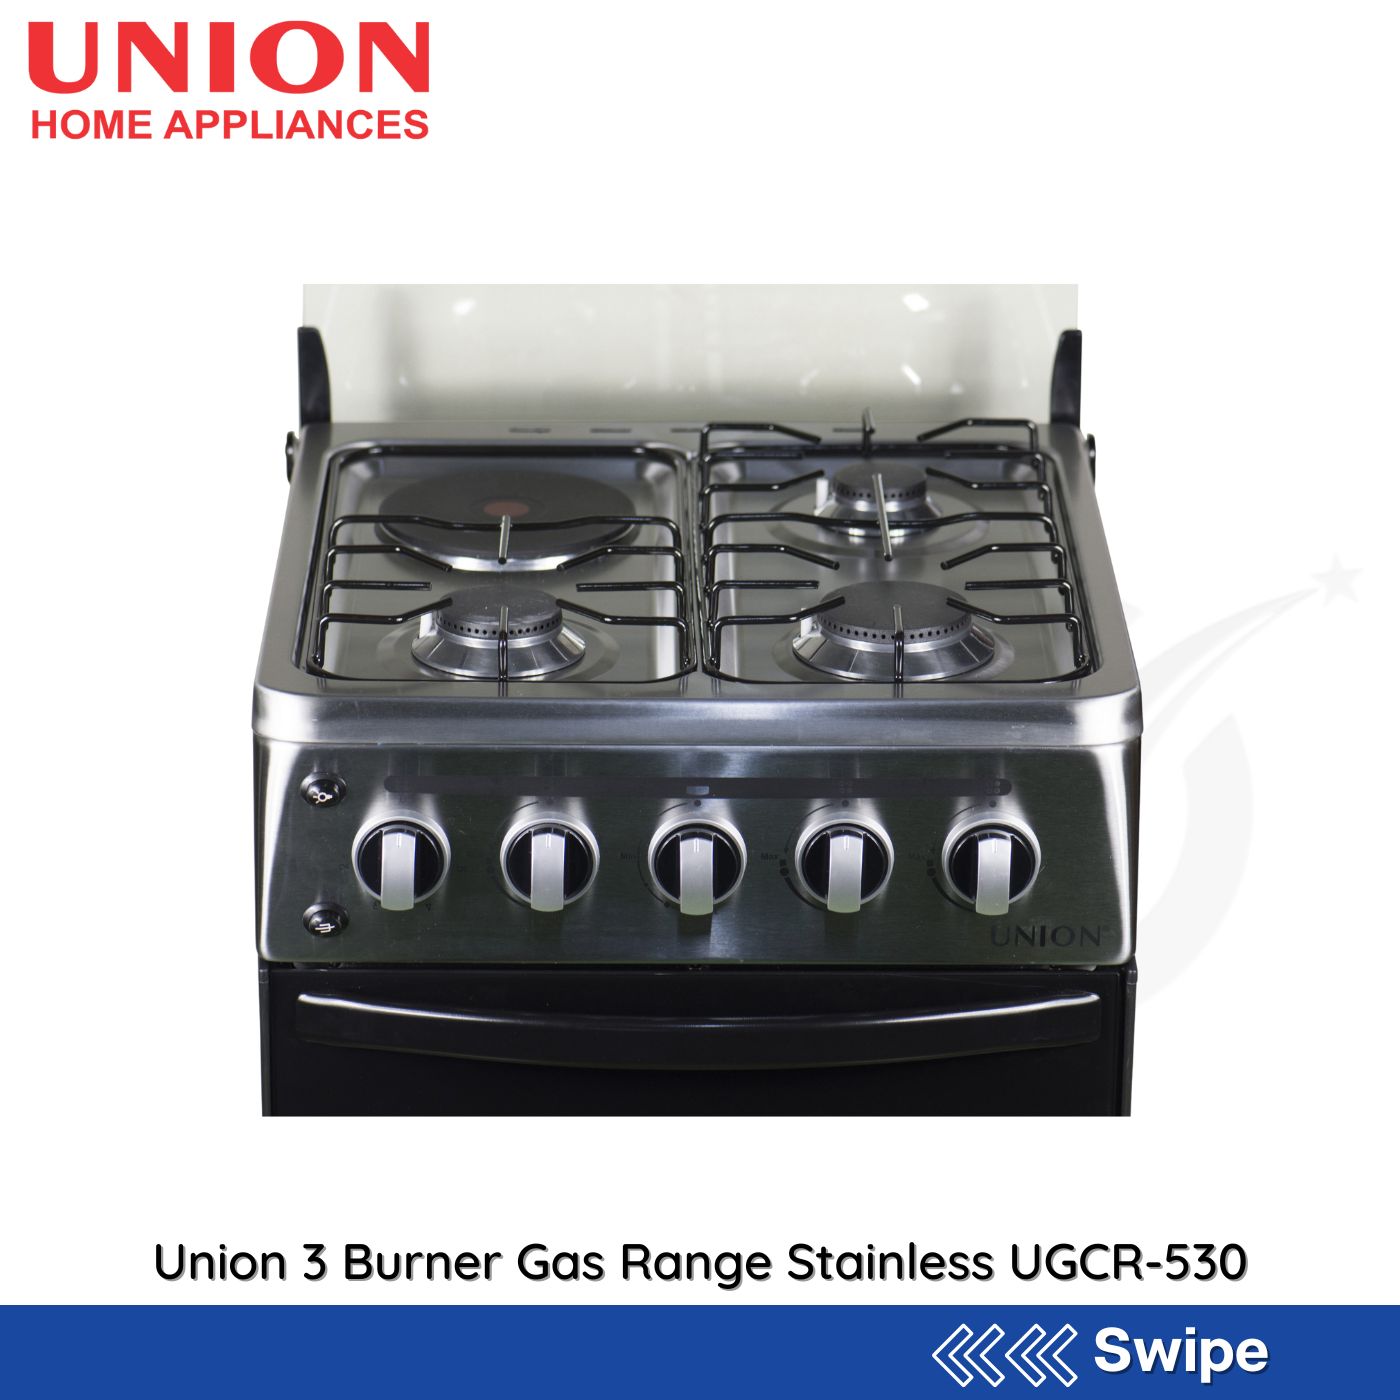 Union 3 Burner Gas Range Stainless UGCR-530